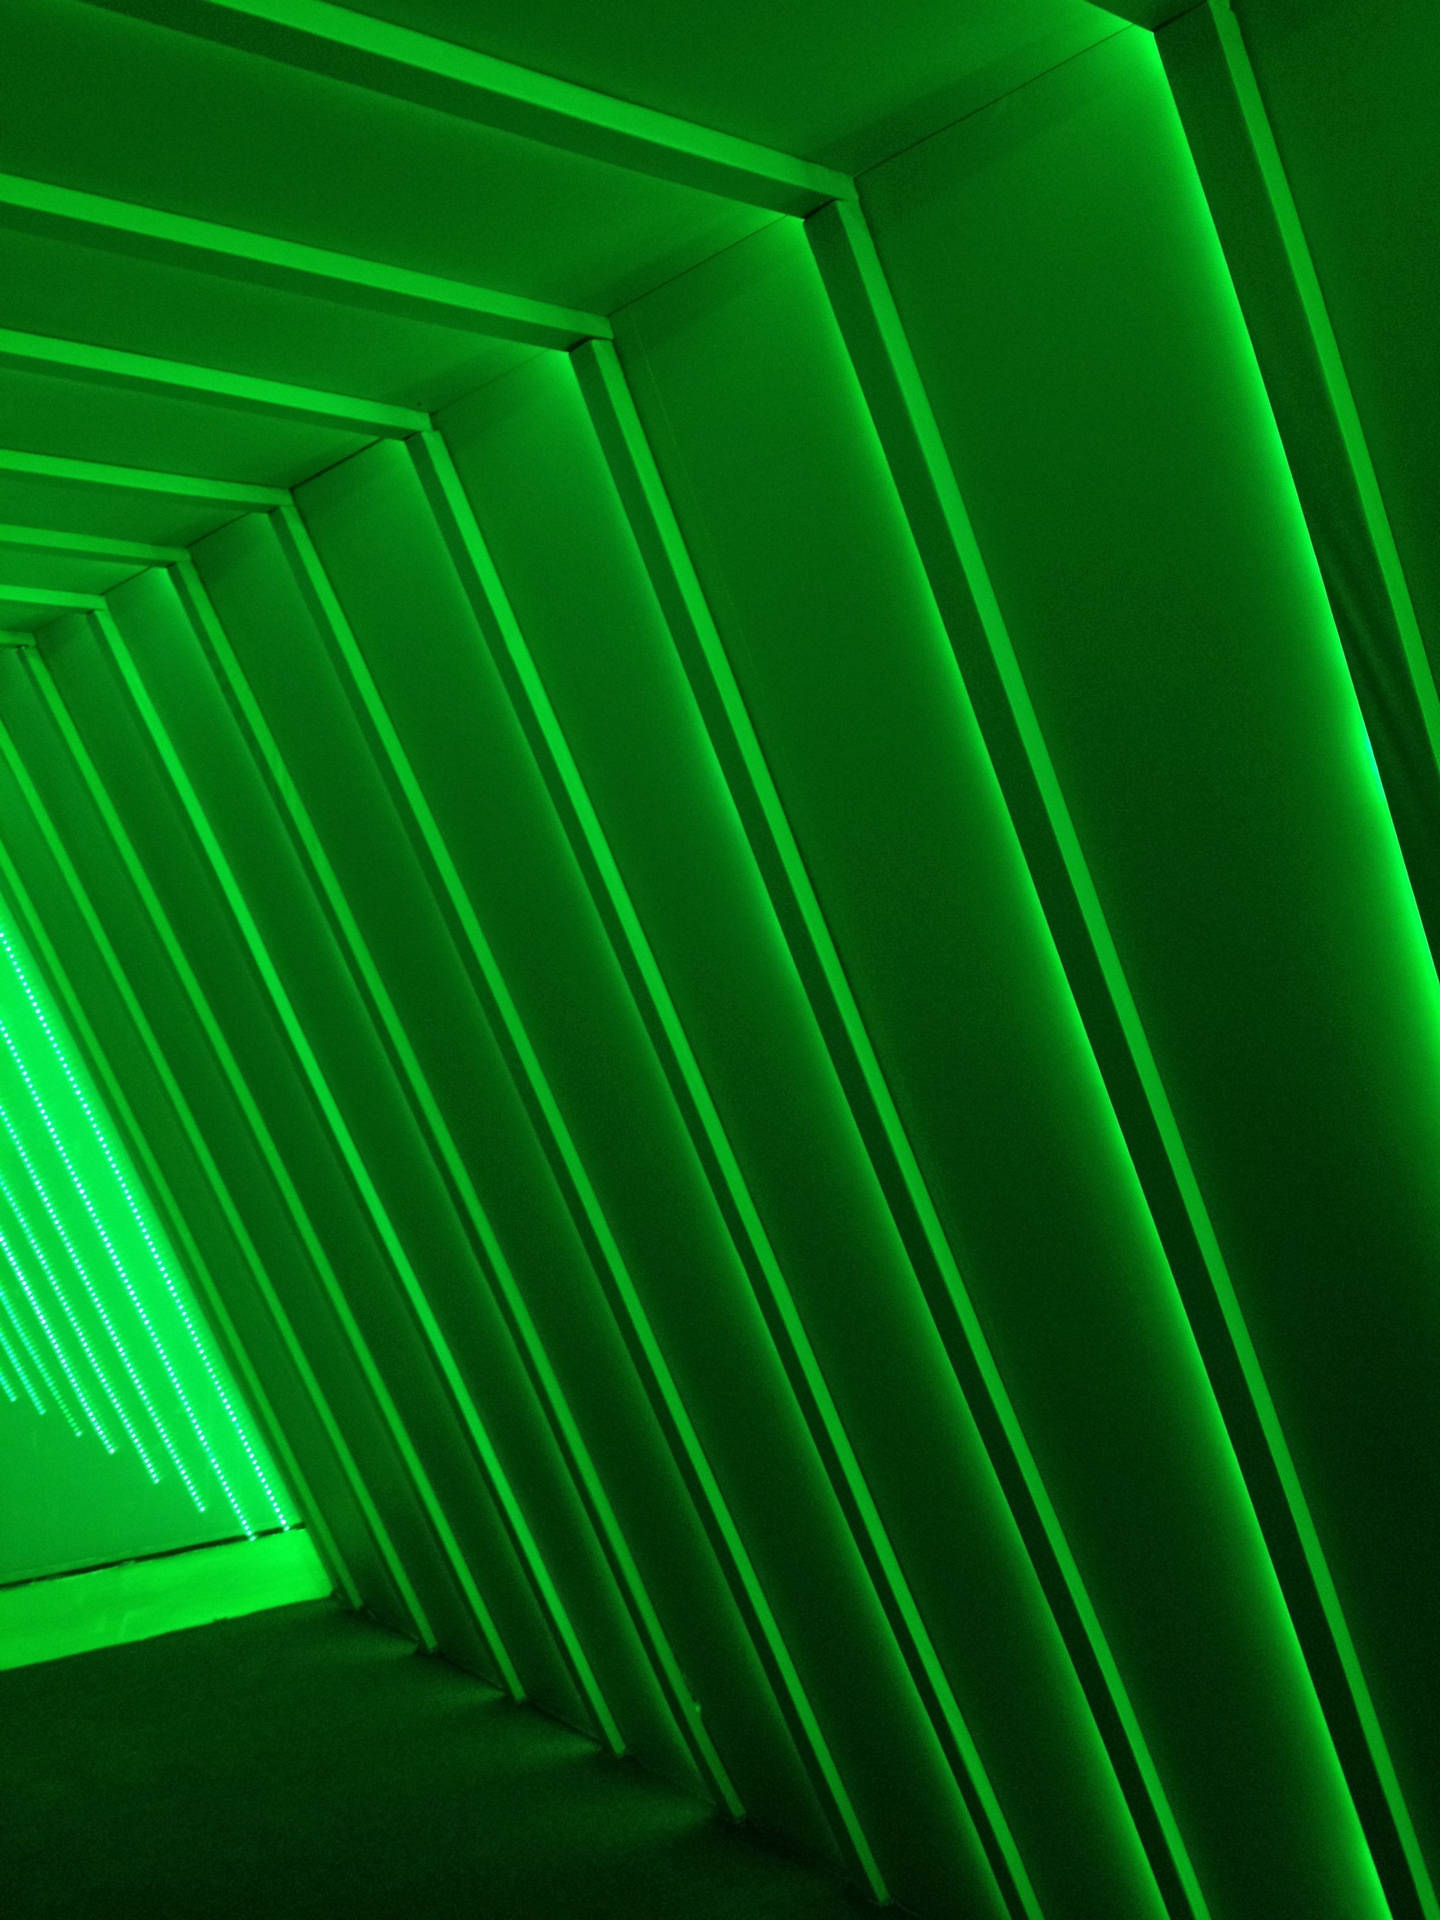 Neon Green Aesthetic Tumblr Wall Lights